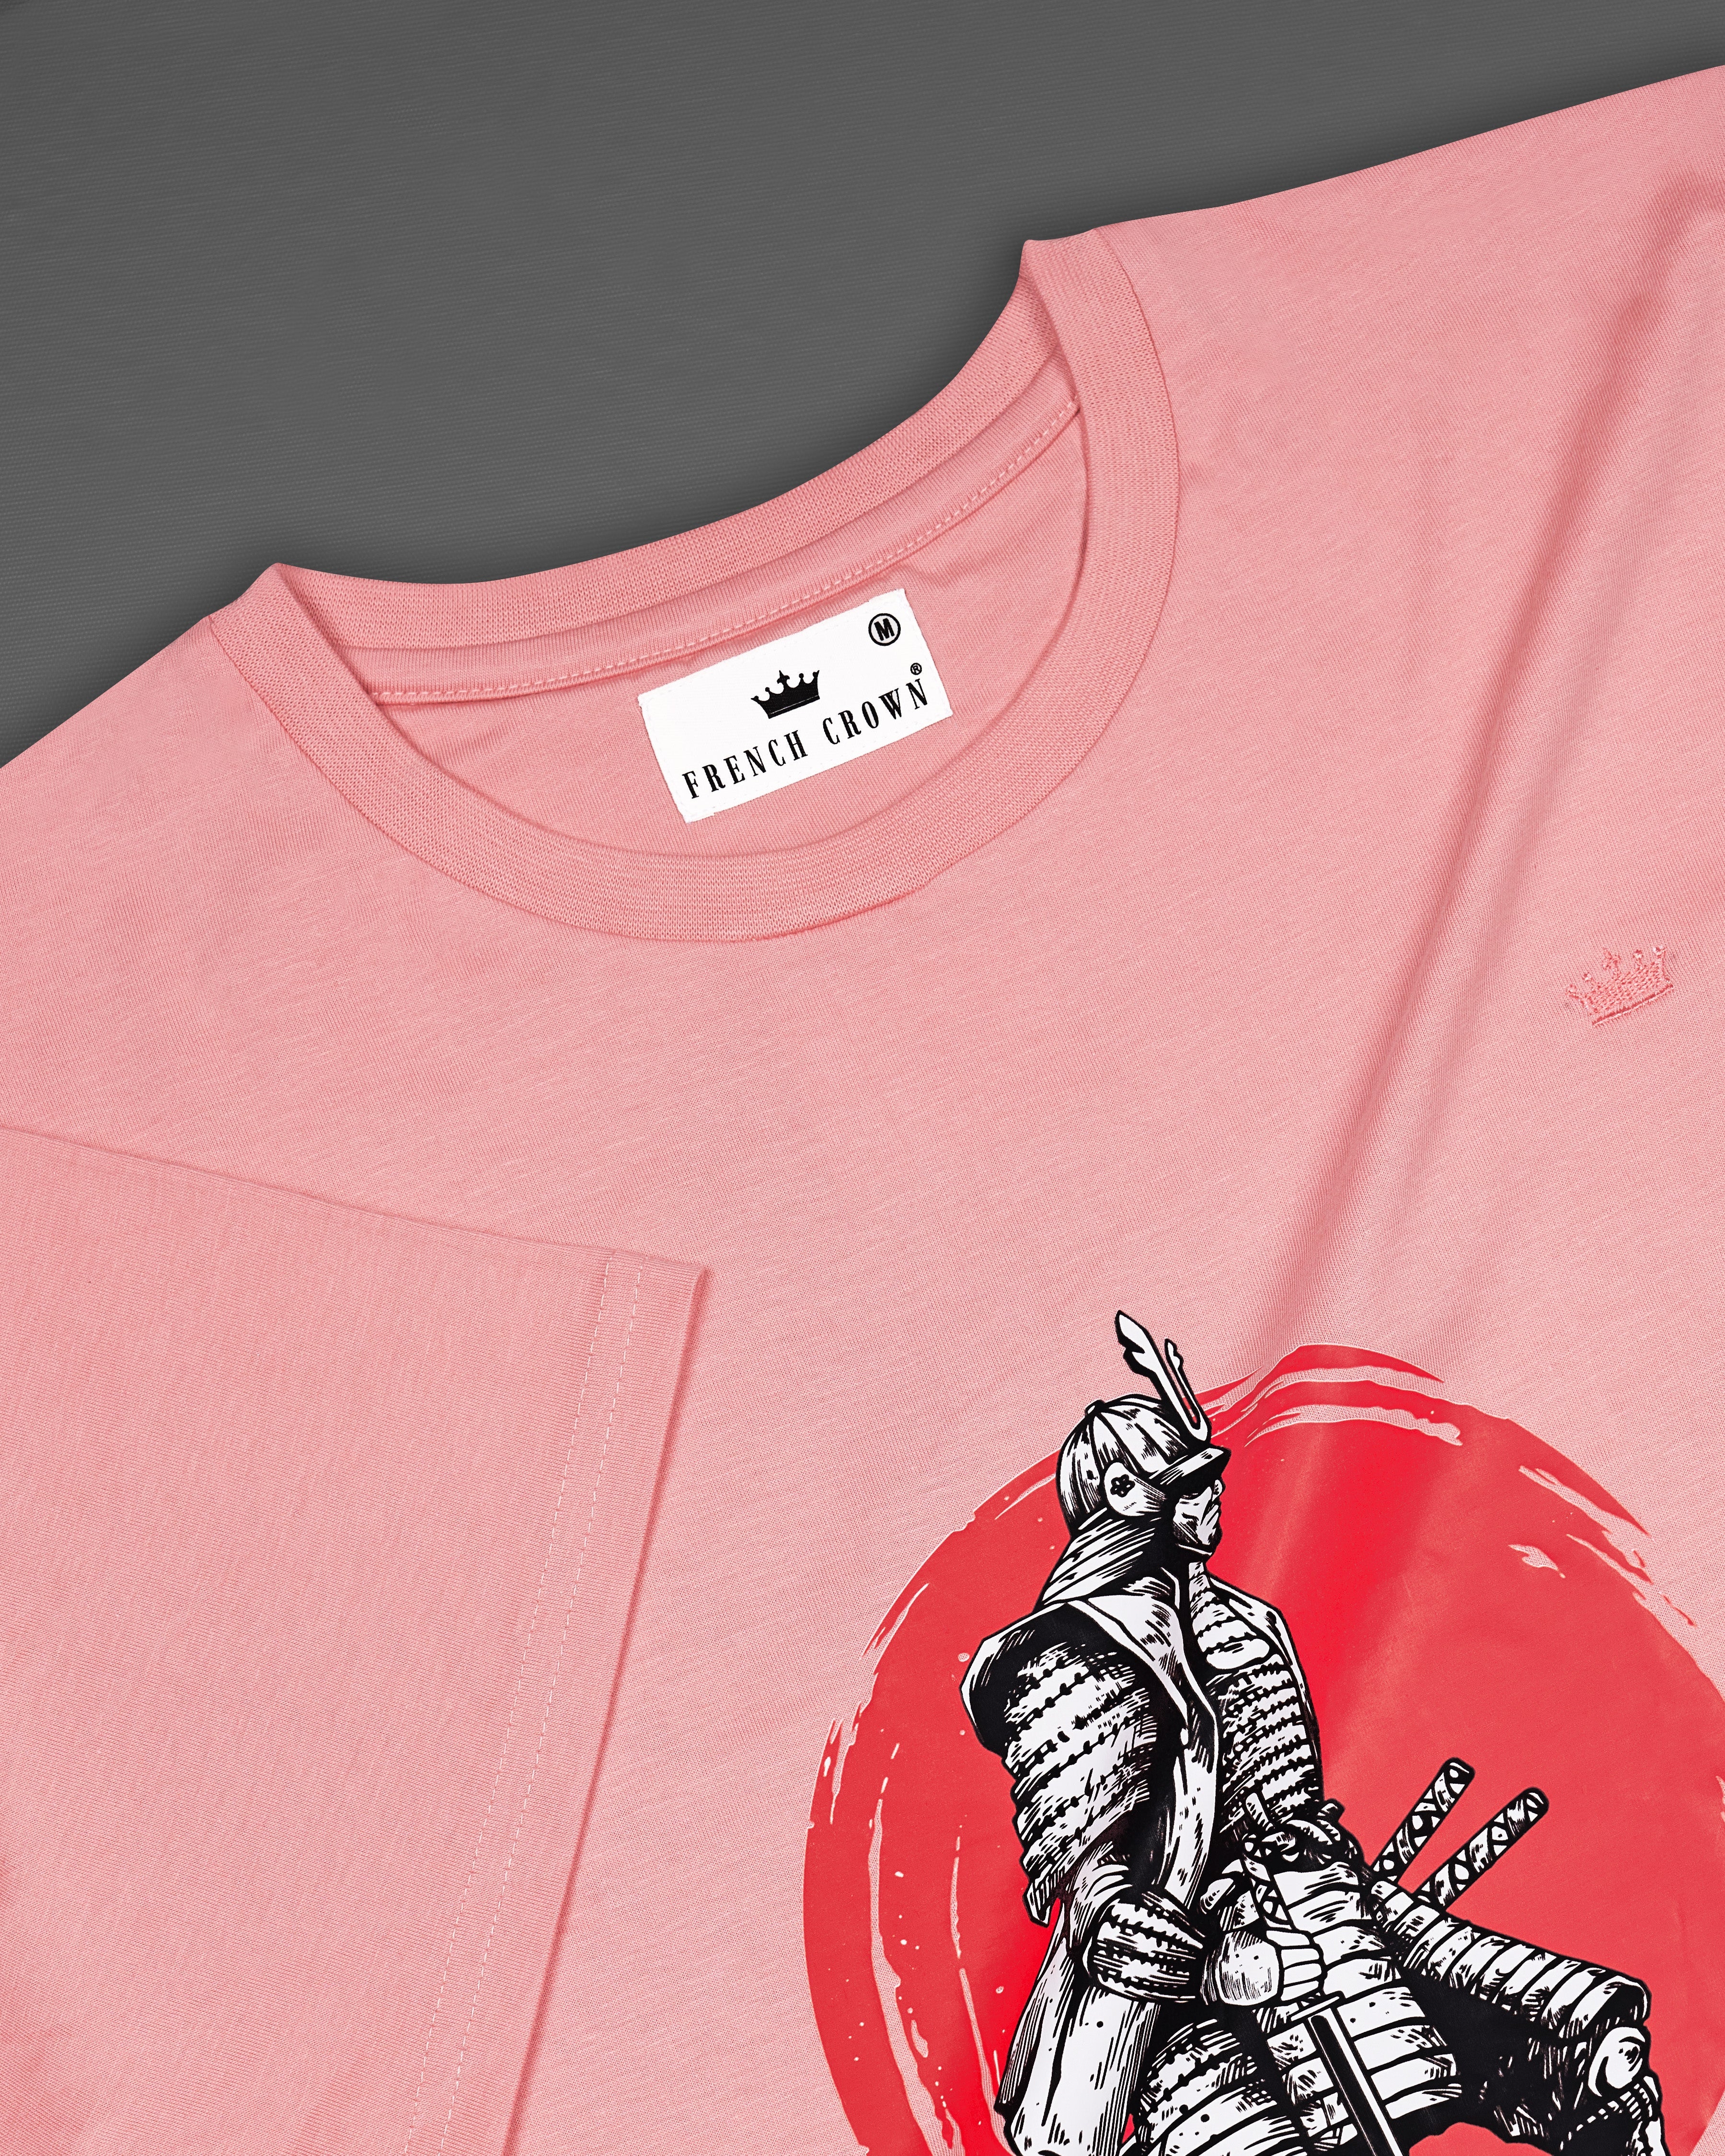 Chestnut Pink Digital Printed Organic Cotton T-shirt TS072-W01-S, TS072-W01-M, TS072-W01-L, TS072-W01-XL, TS072-W01-XXL